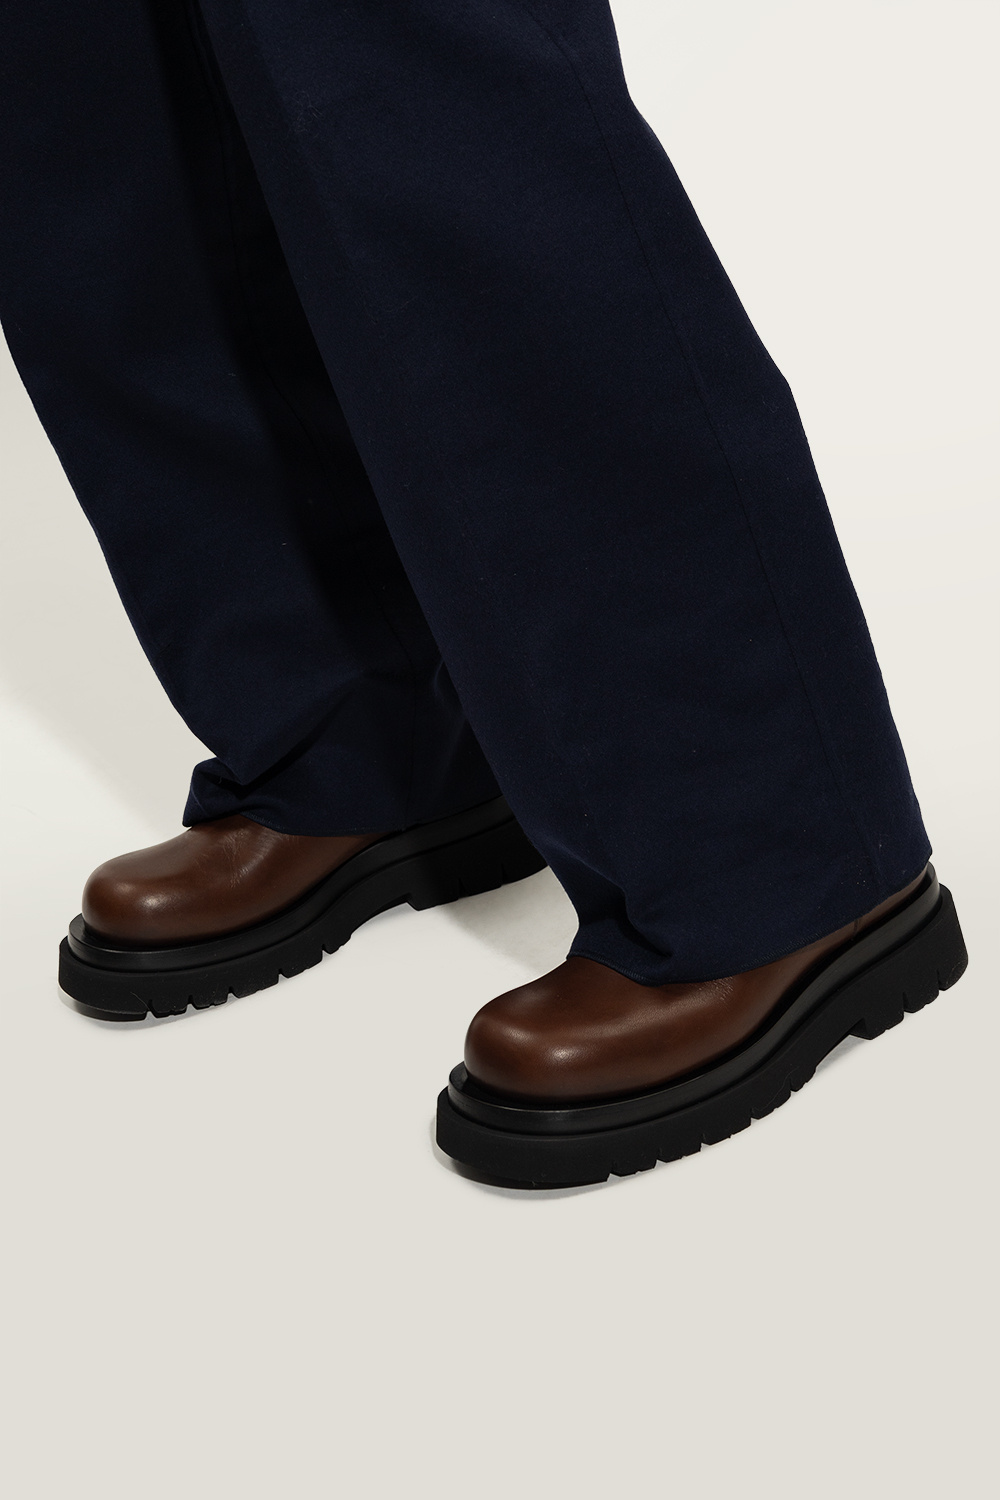 Bottega Veneta ‘Lug’ ankle boots